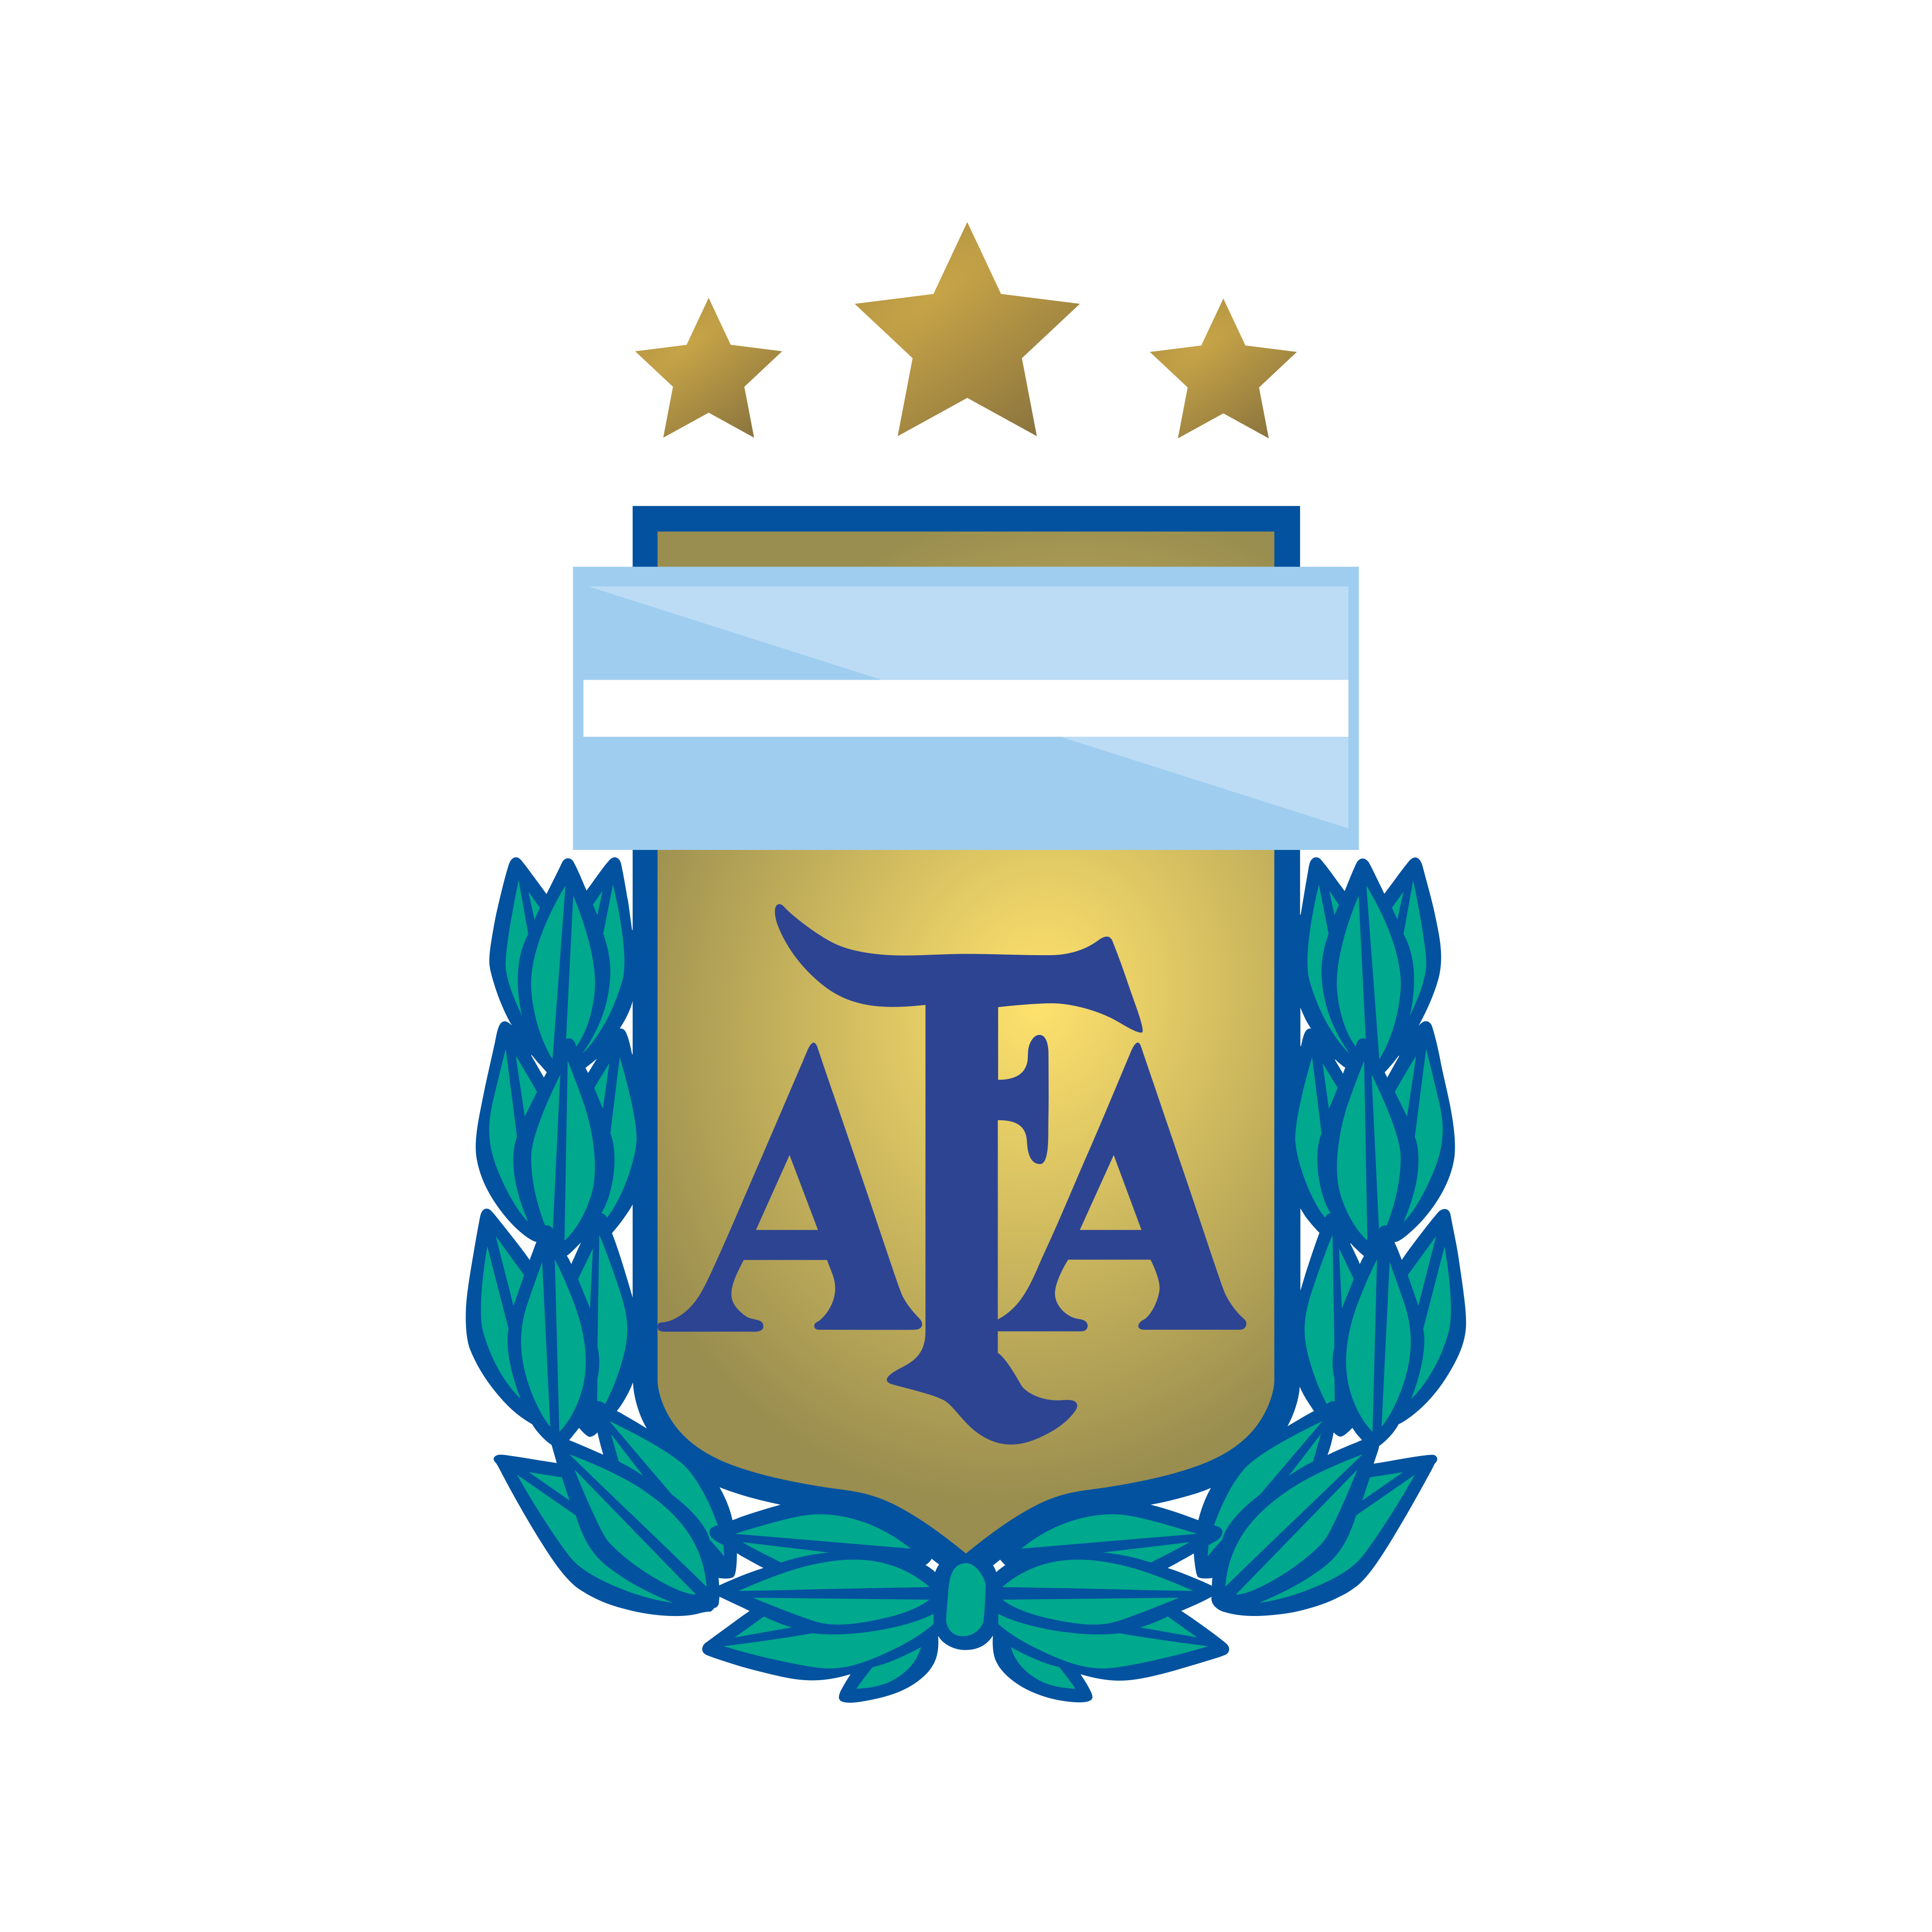 Argentina National Football Team Logo PNG.